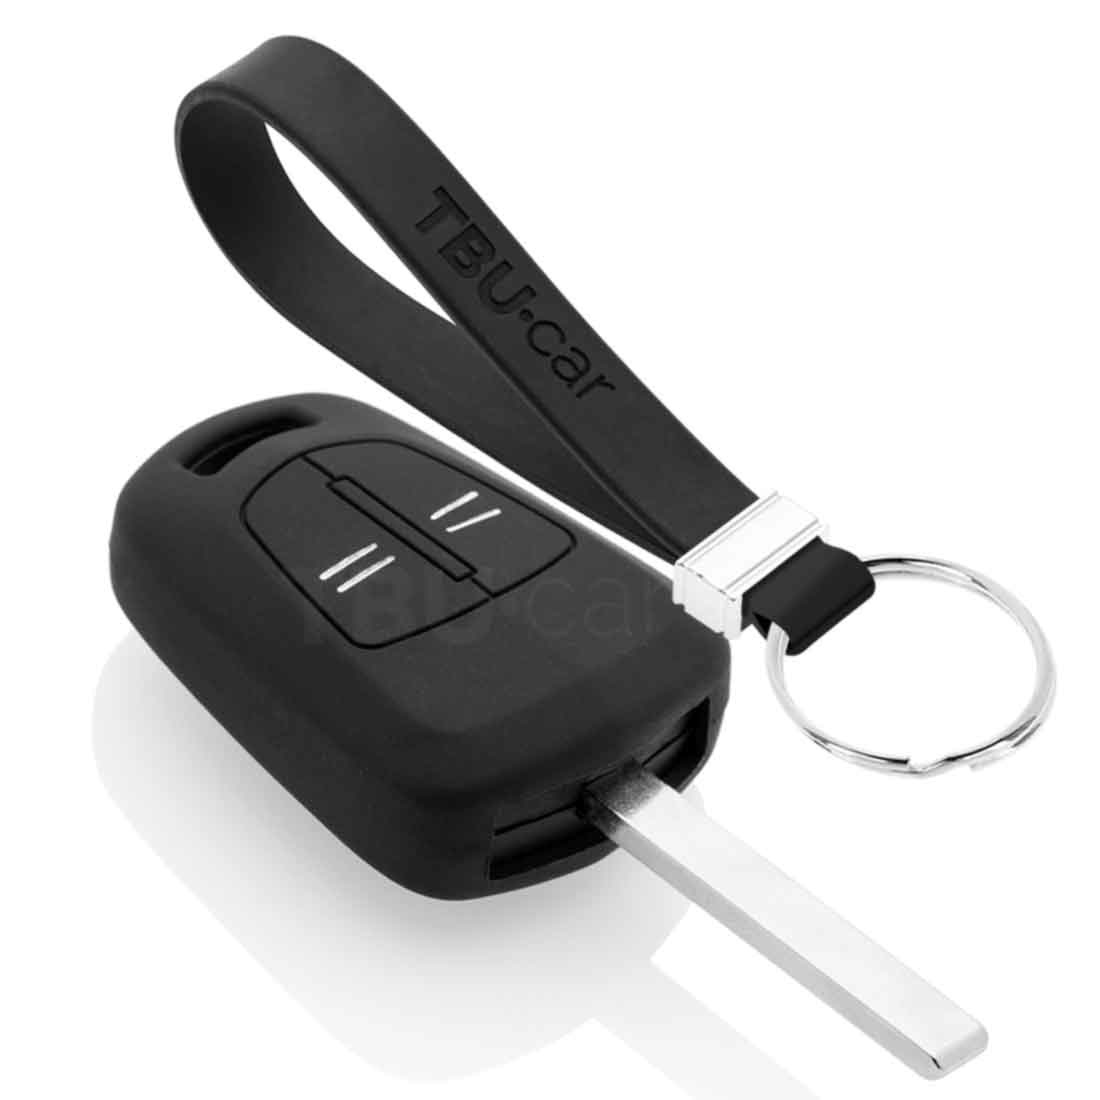 TBU car TBU car Autoschlüssel Hülle kompatibel mit Opel 2 Tasten - Schutzhülle aus Silikon - Auto Schlüsselhülle Cover in Schwarz